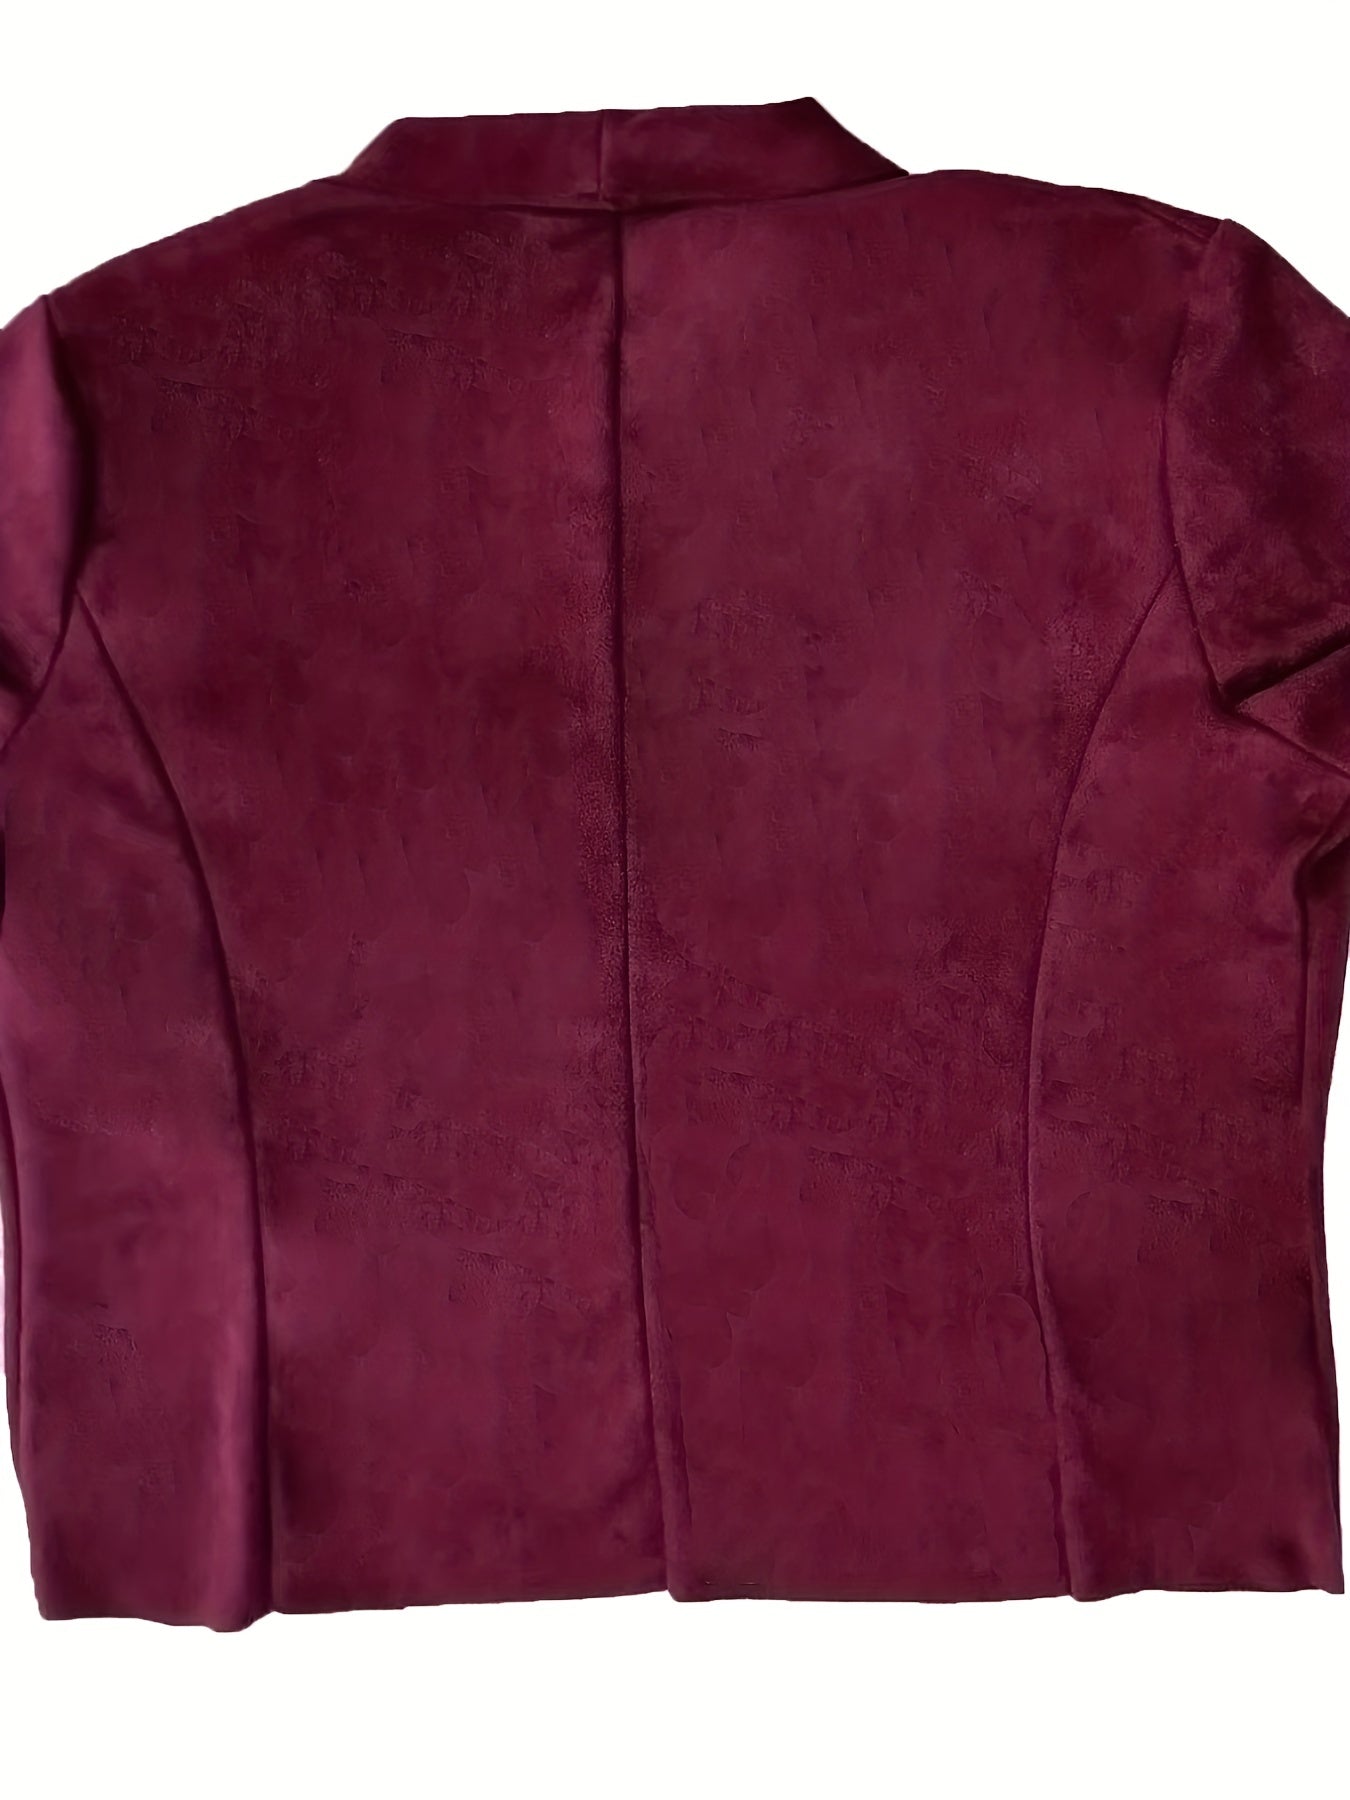 Antmvs Solid Open Front Coat, Elegant Long Sleeve Work Office Outerwear, Women's Clothing